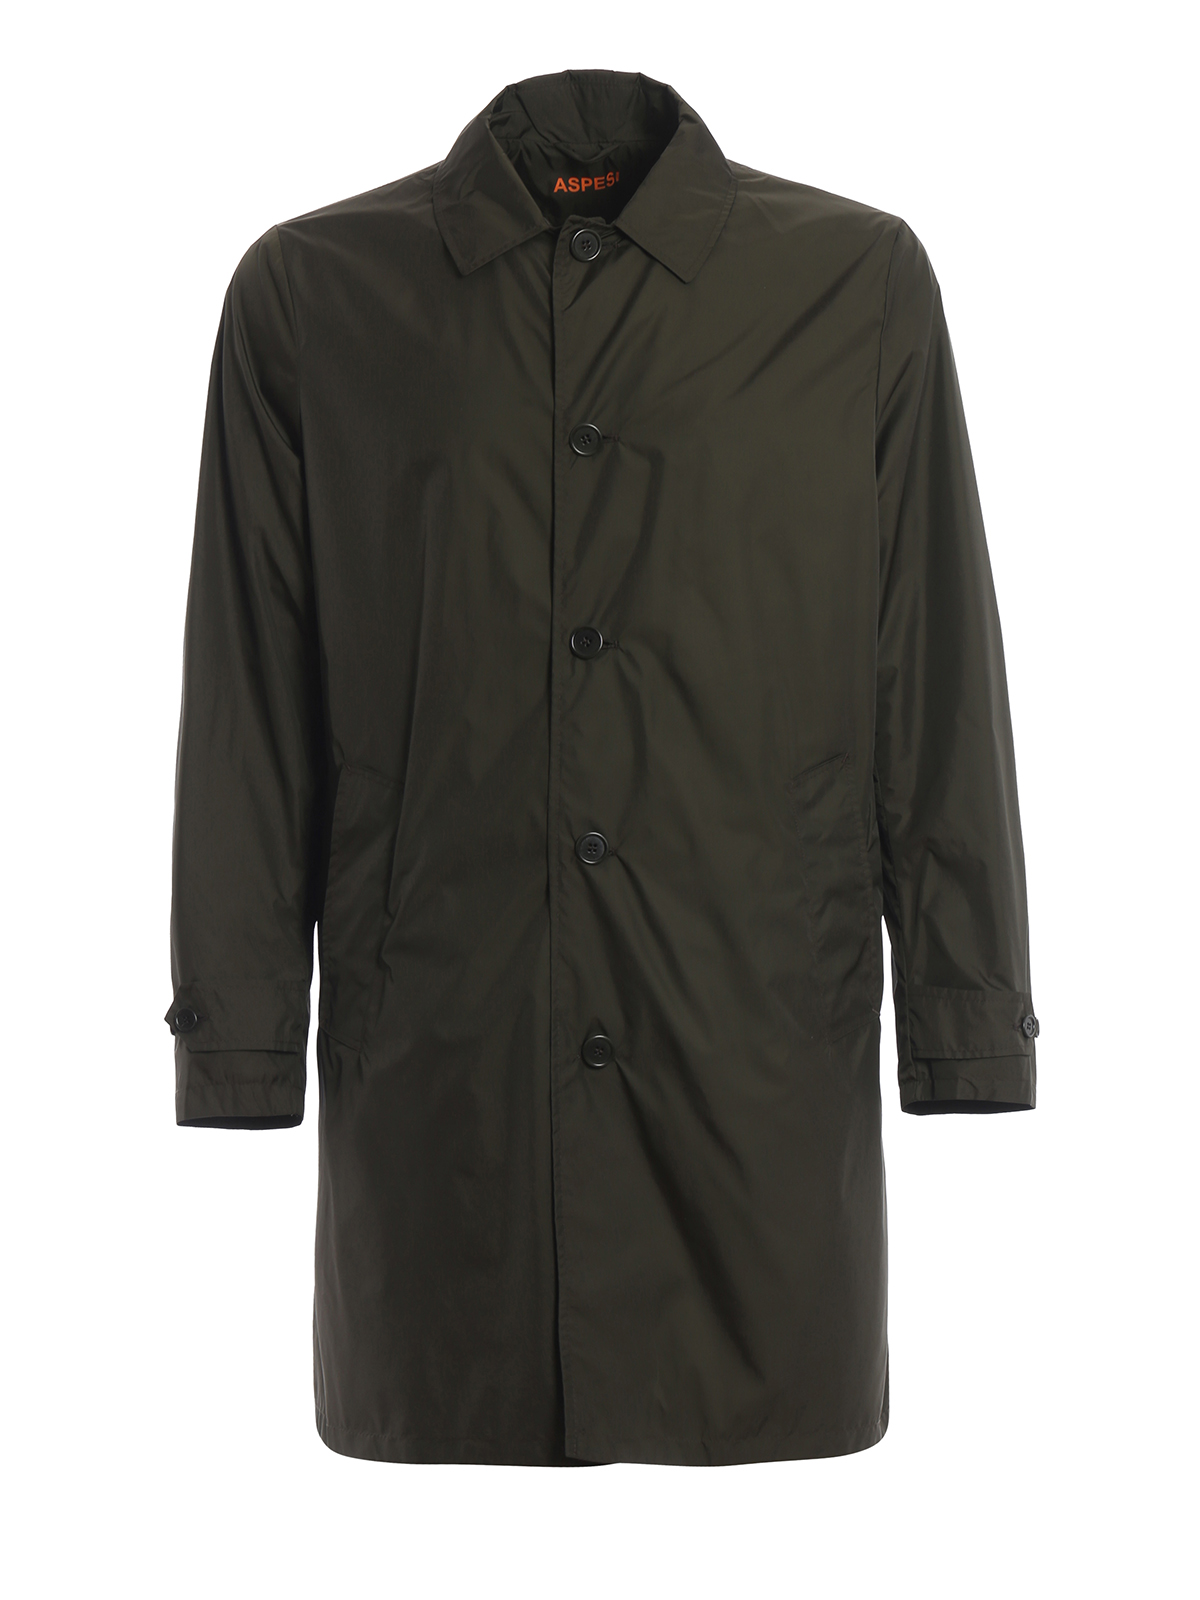 Aspesi - Limone raincoat - trench coats - I236795485399 | iKRIX.com